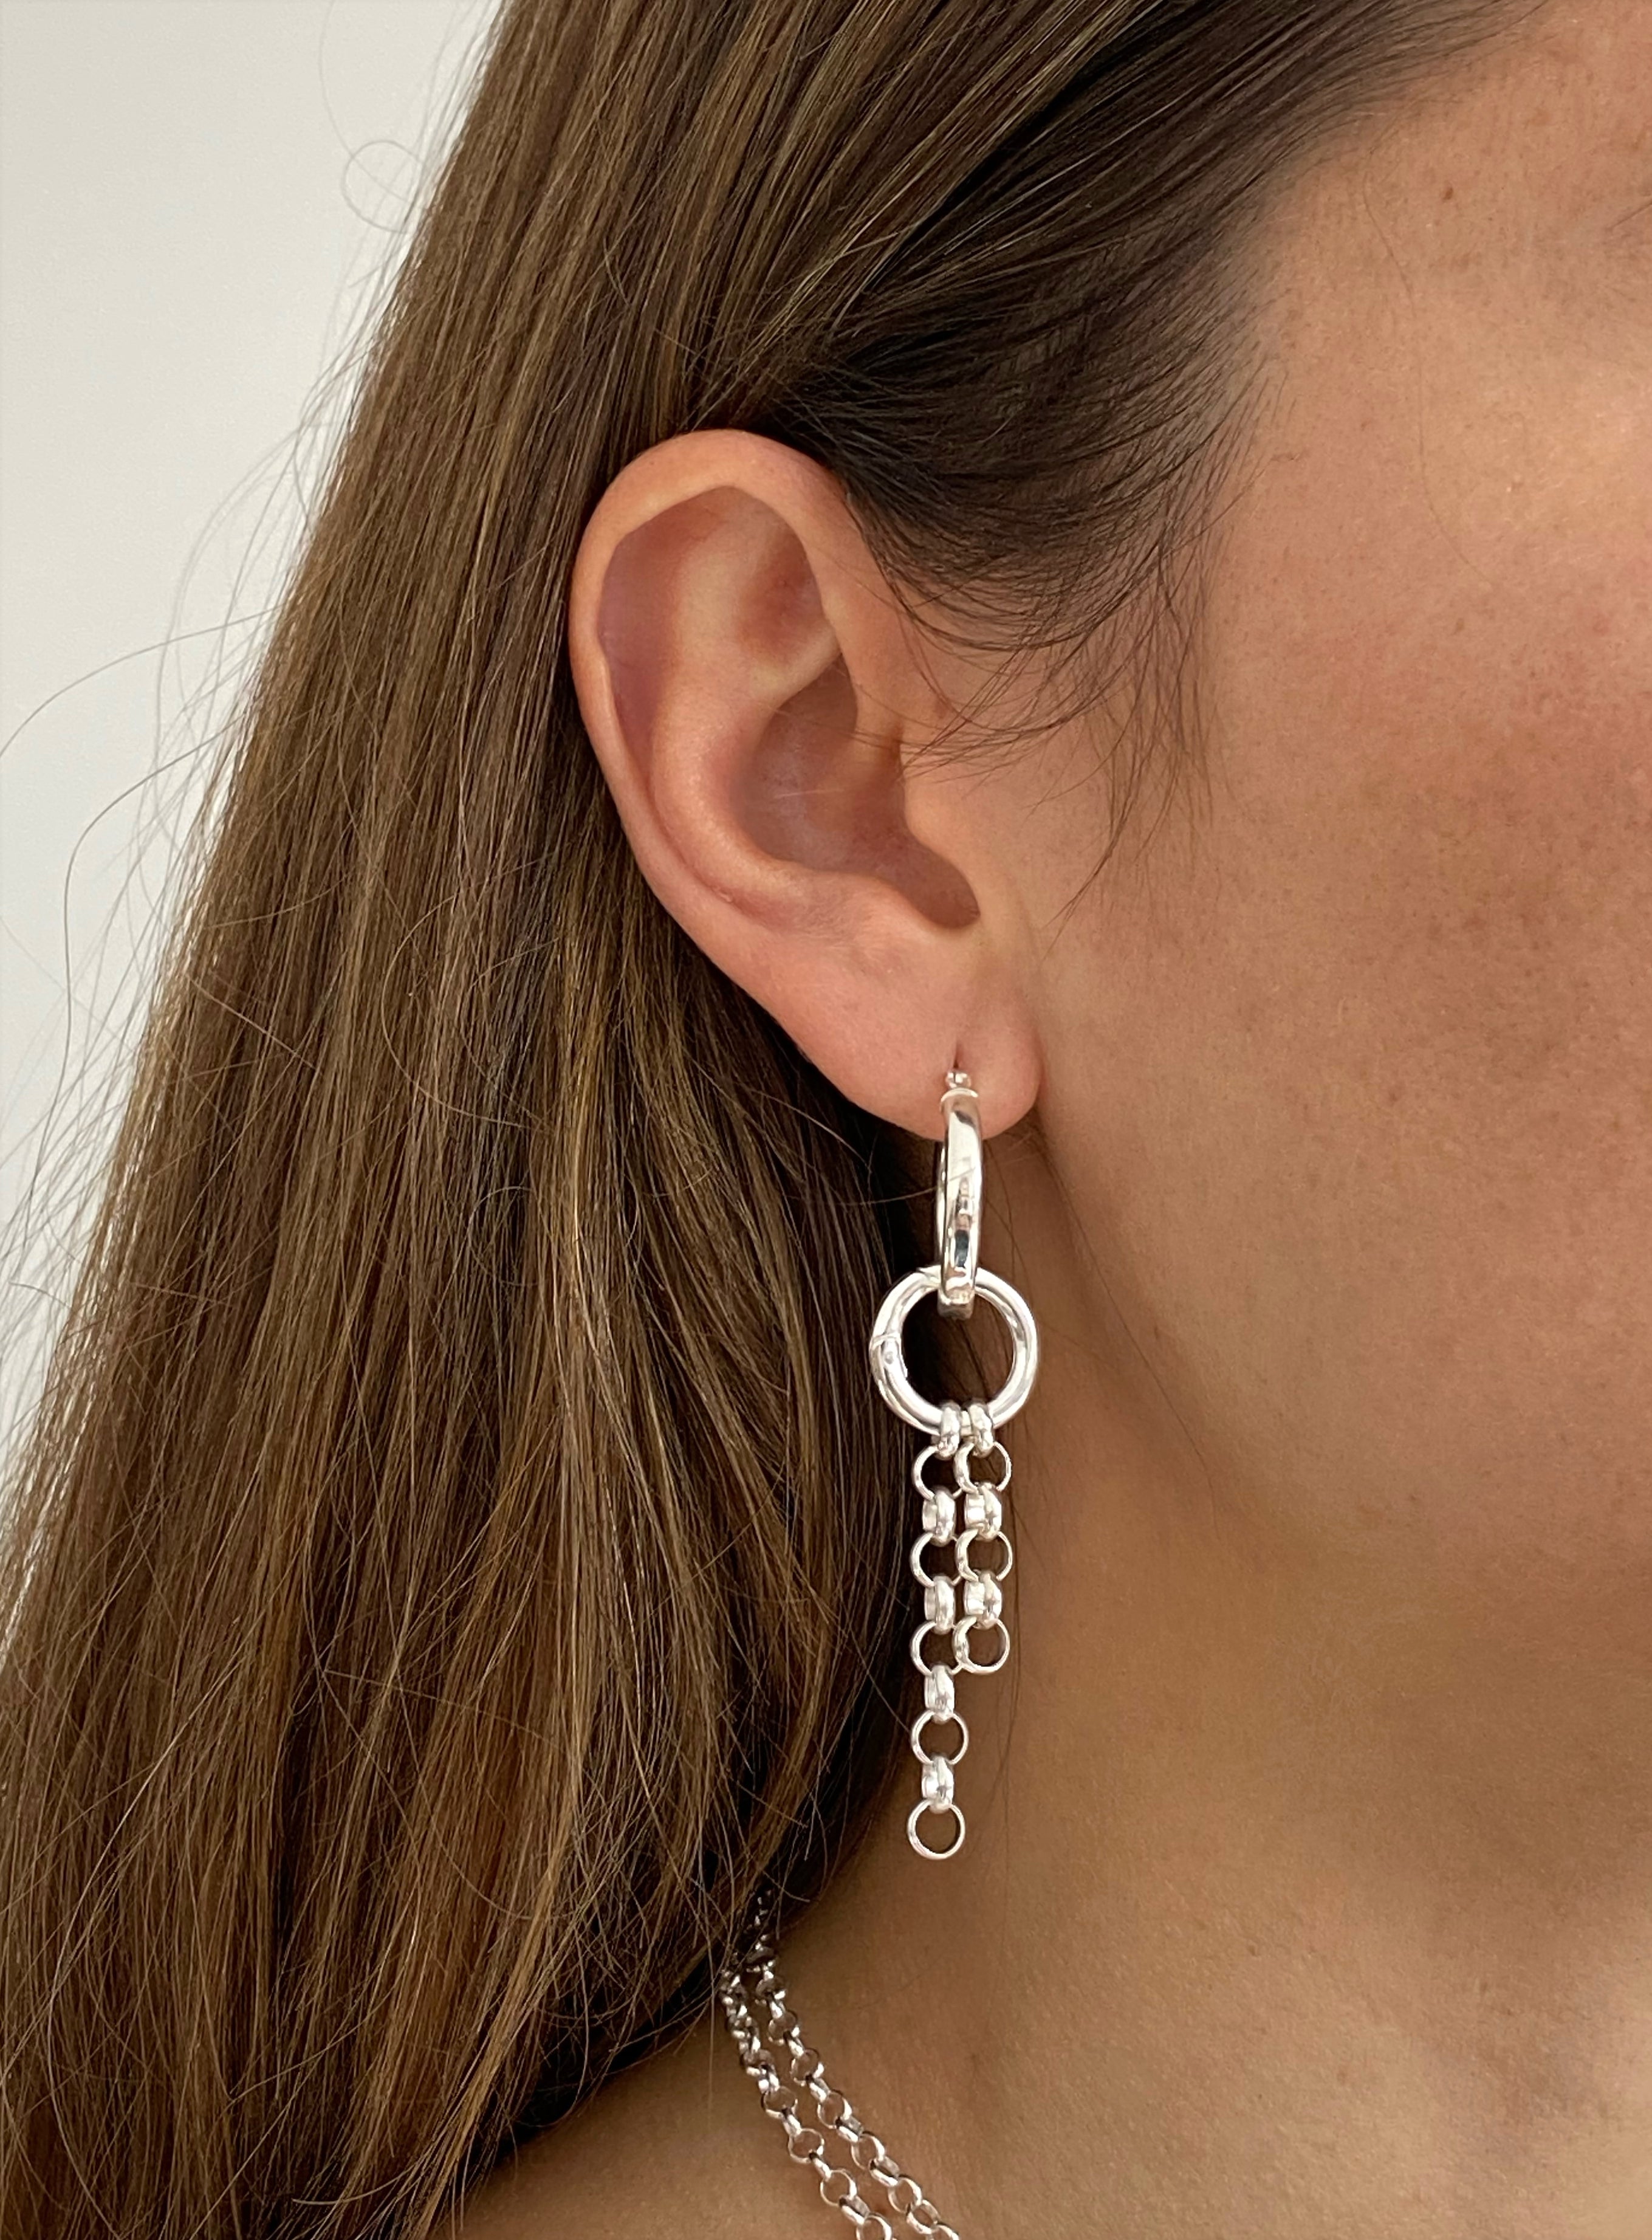 llayers jewelry trendy designer women silver chain hoops earrings jewelry minimal - Made in Brooklyn New York 1